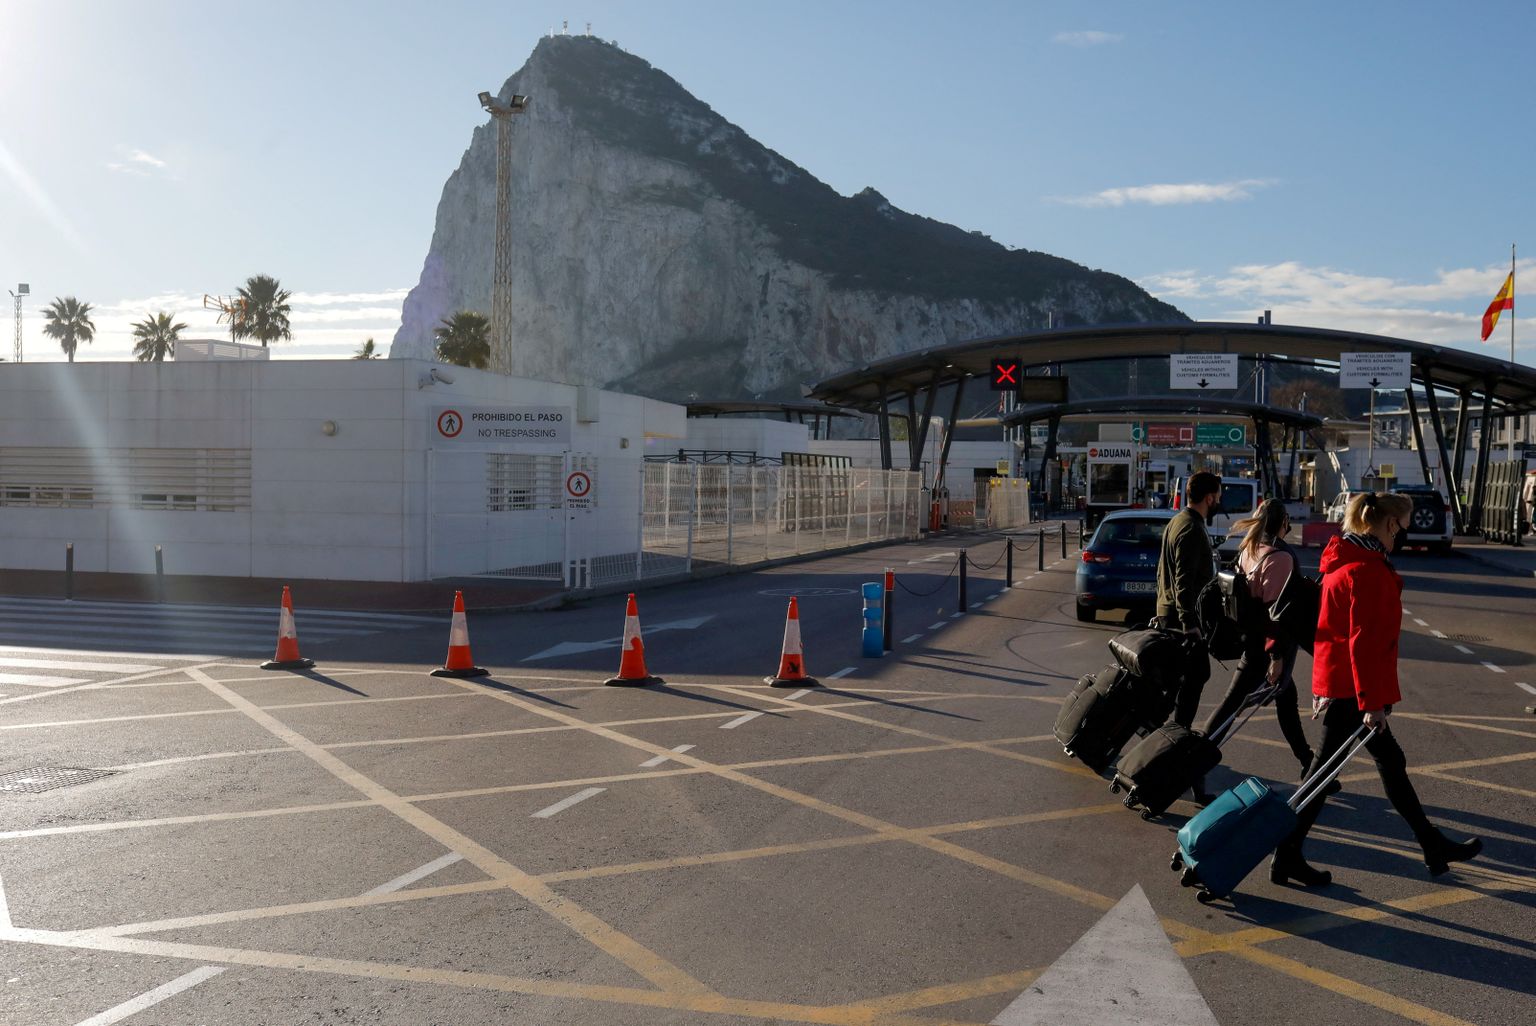 Gibraltari kalju. Pilt on illustreeriv.